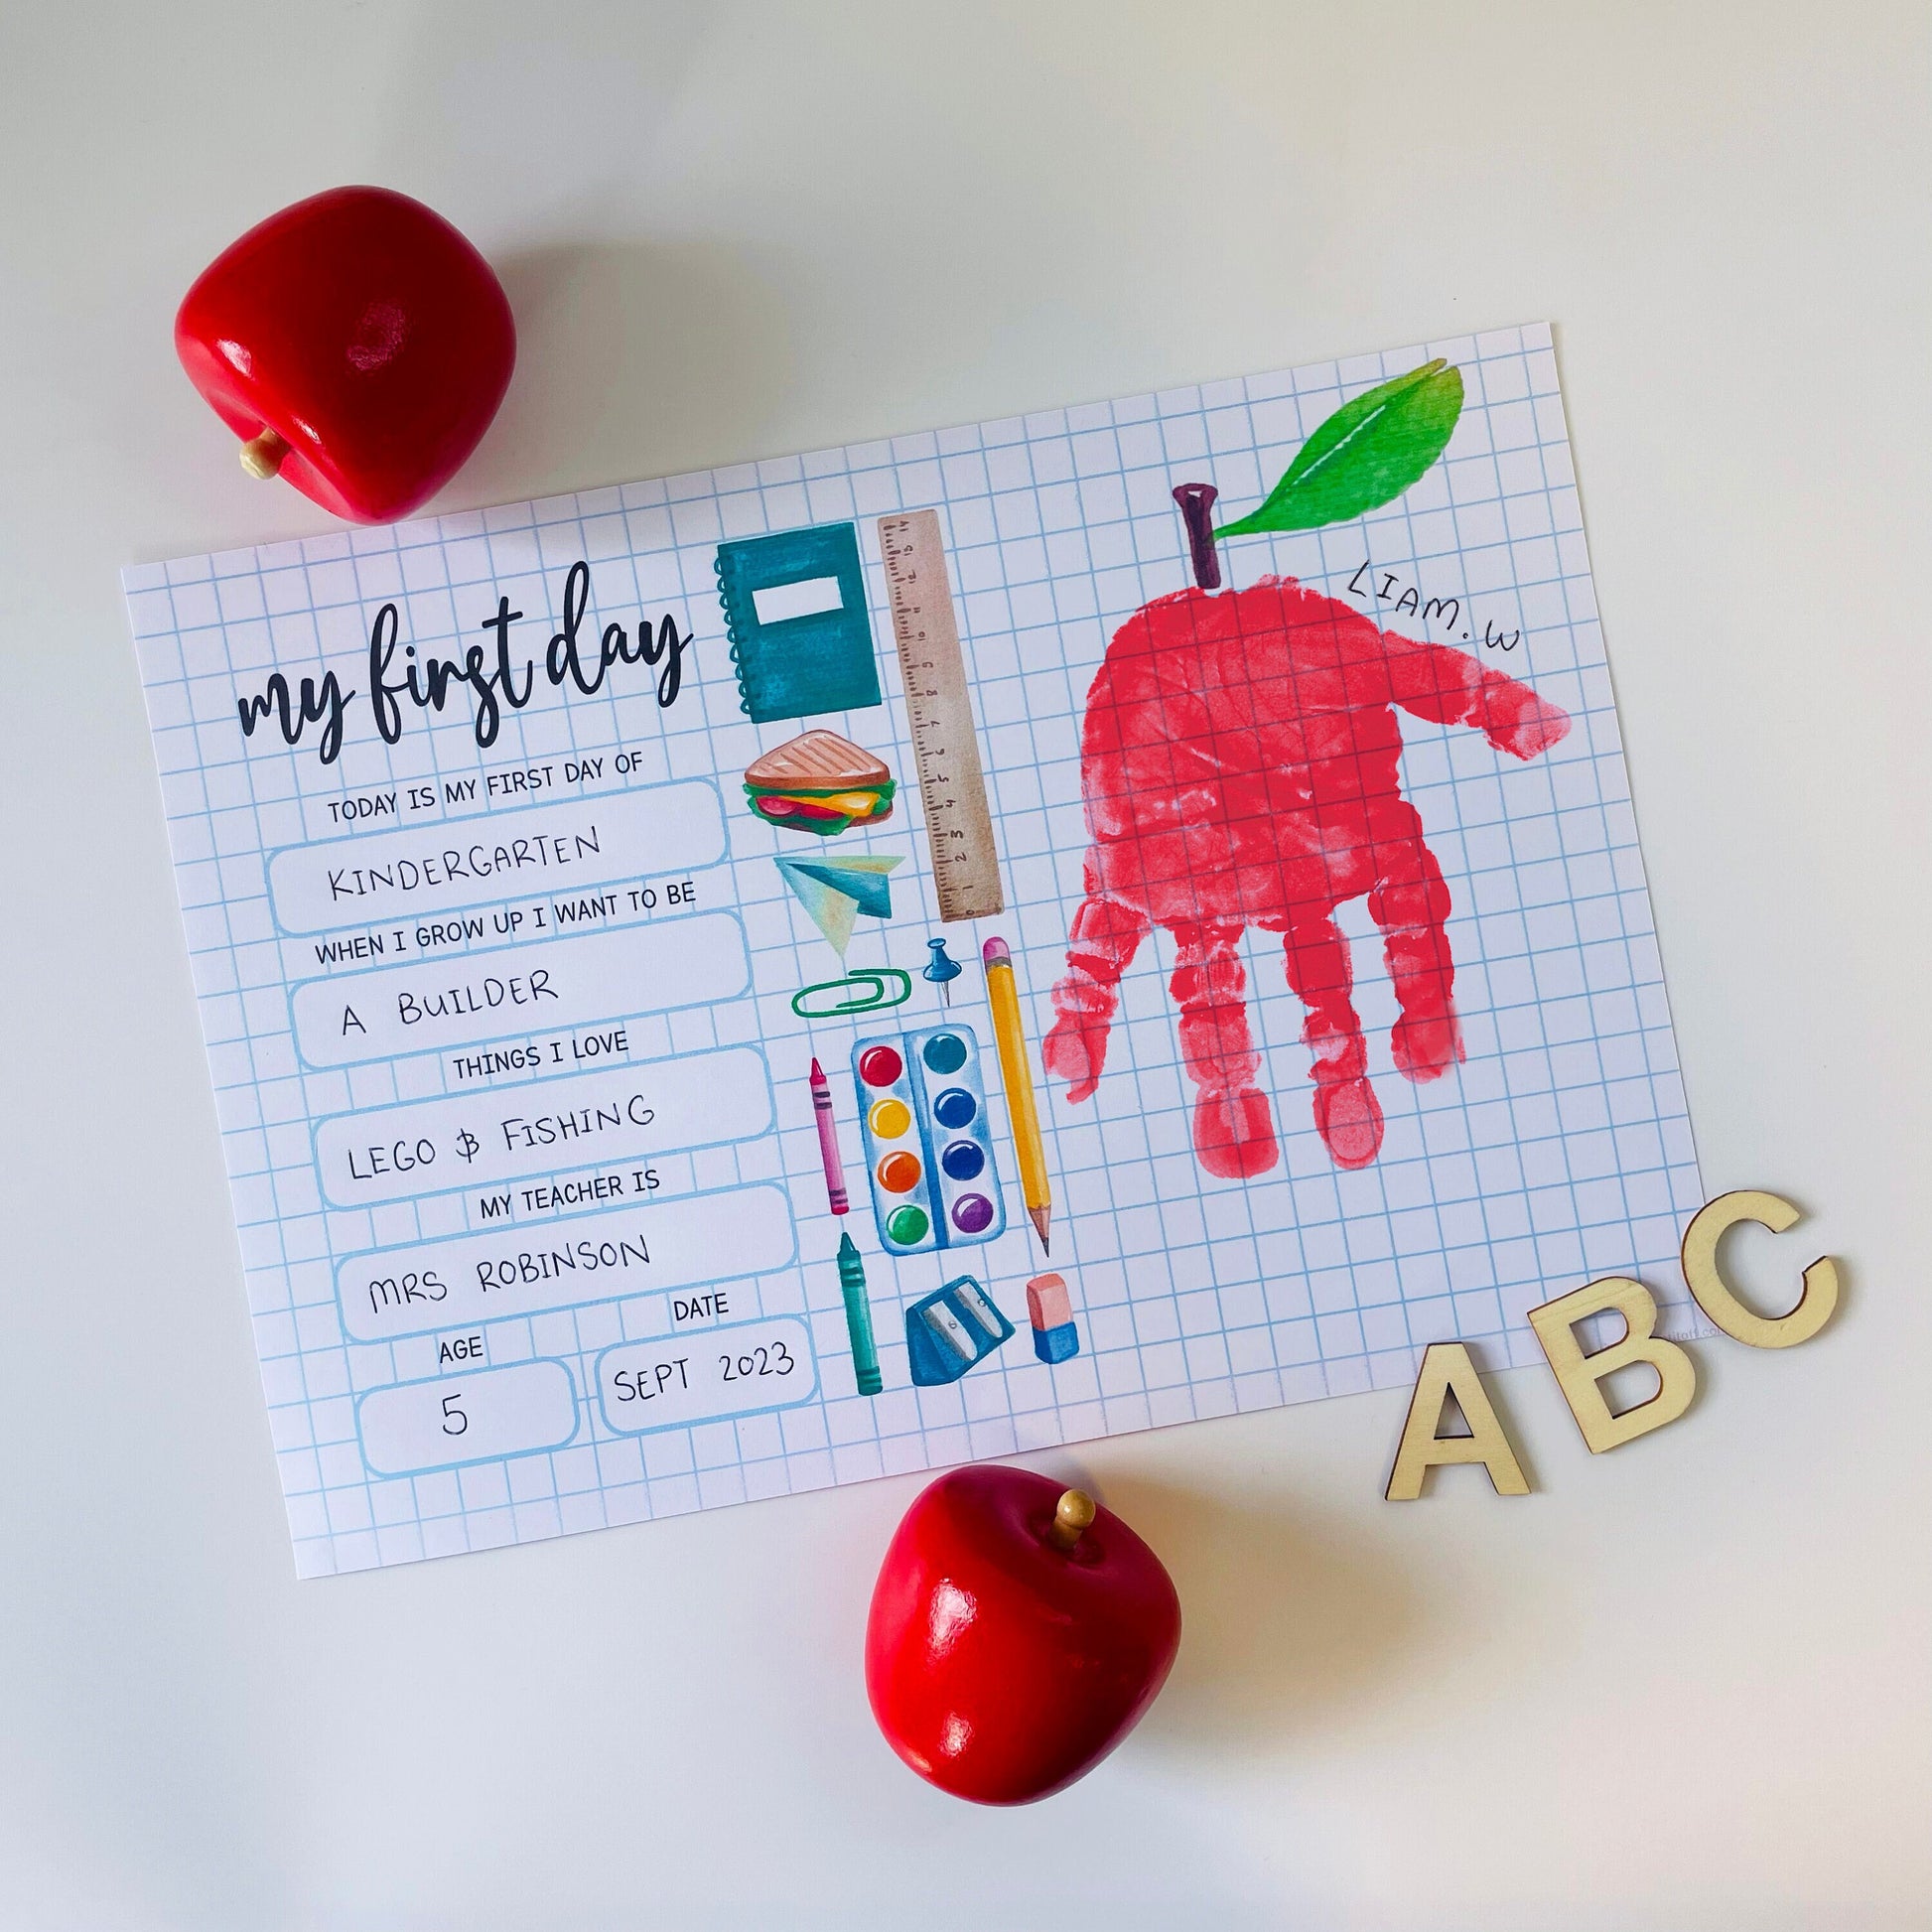 My 1st First Day School / Kindergarten Pre-K Daycare Pre-School / Handprint DIY Art Craft / Board Sign Template Teacher / Print it Off 0759